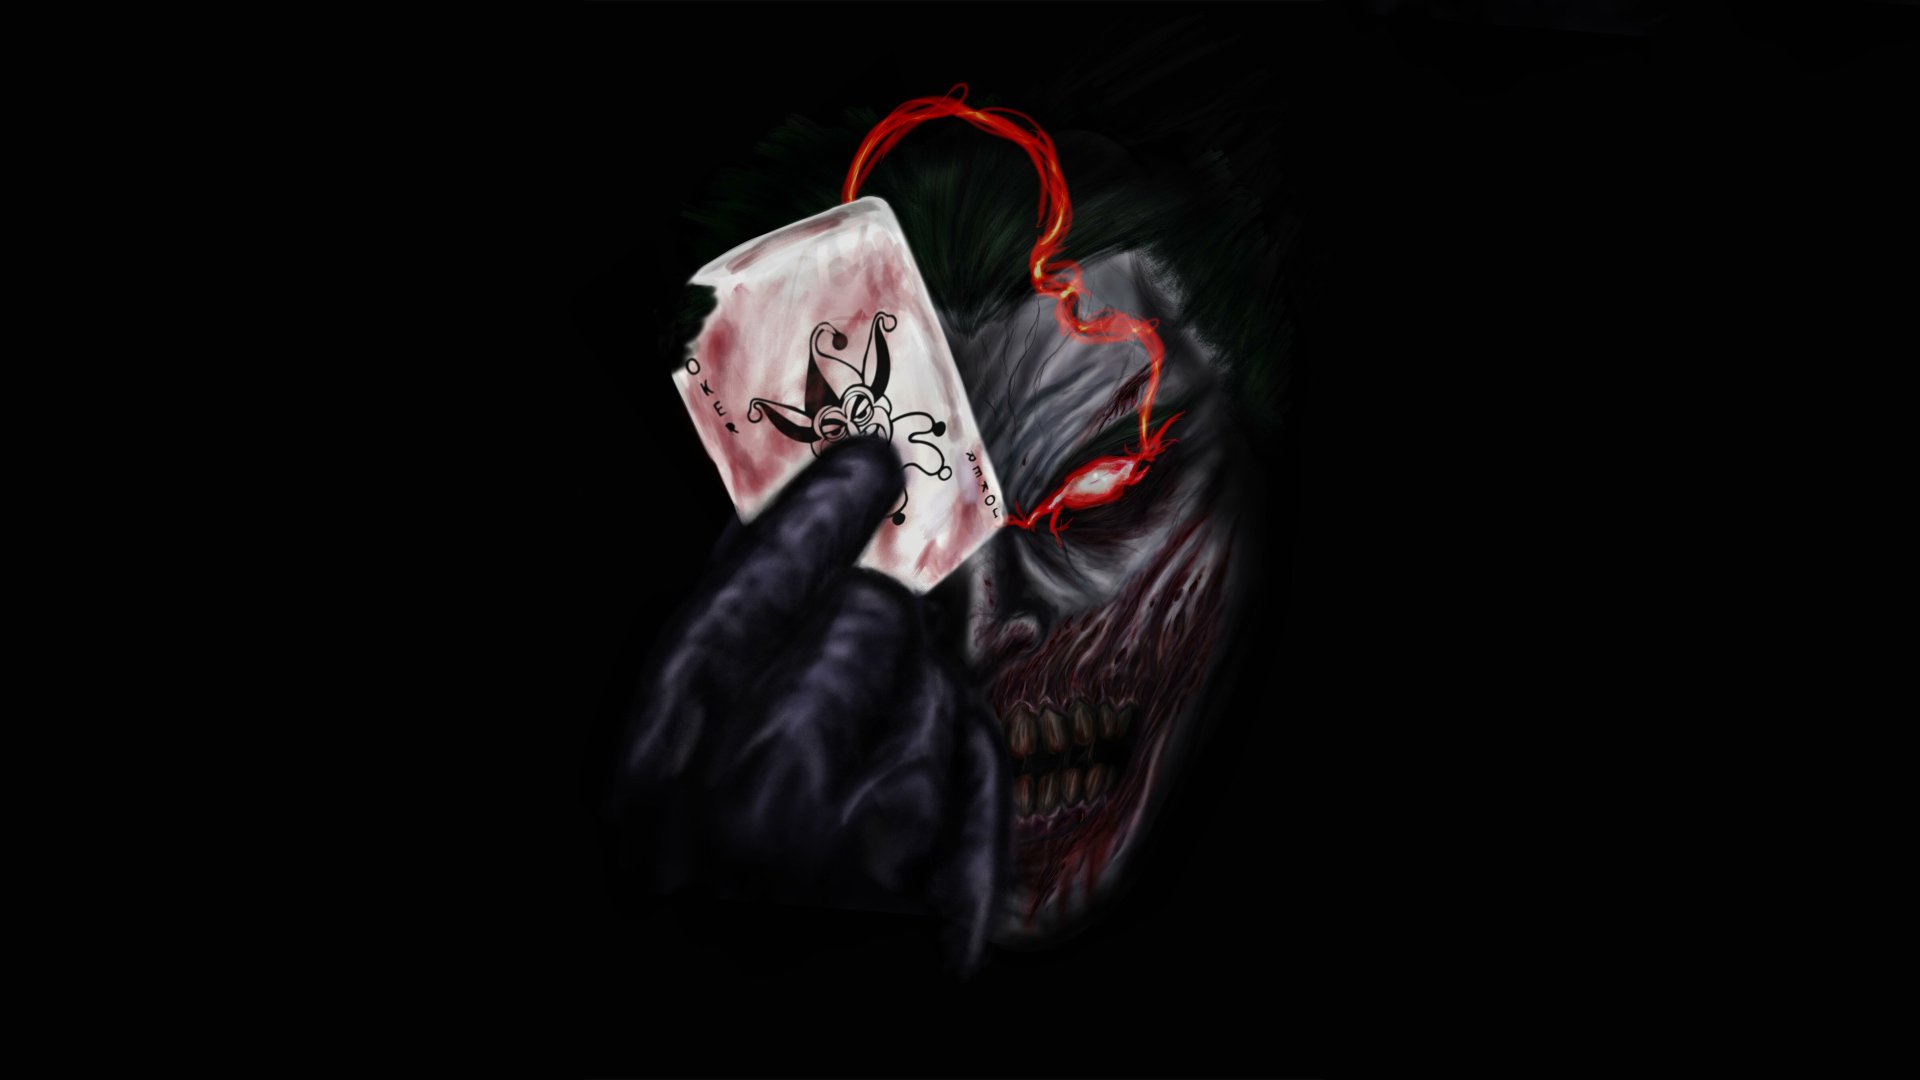 Comics Joker 4k Ultra HD Wallpaper by Herber Crispin